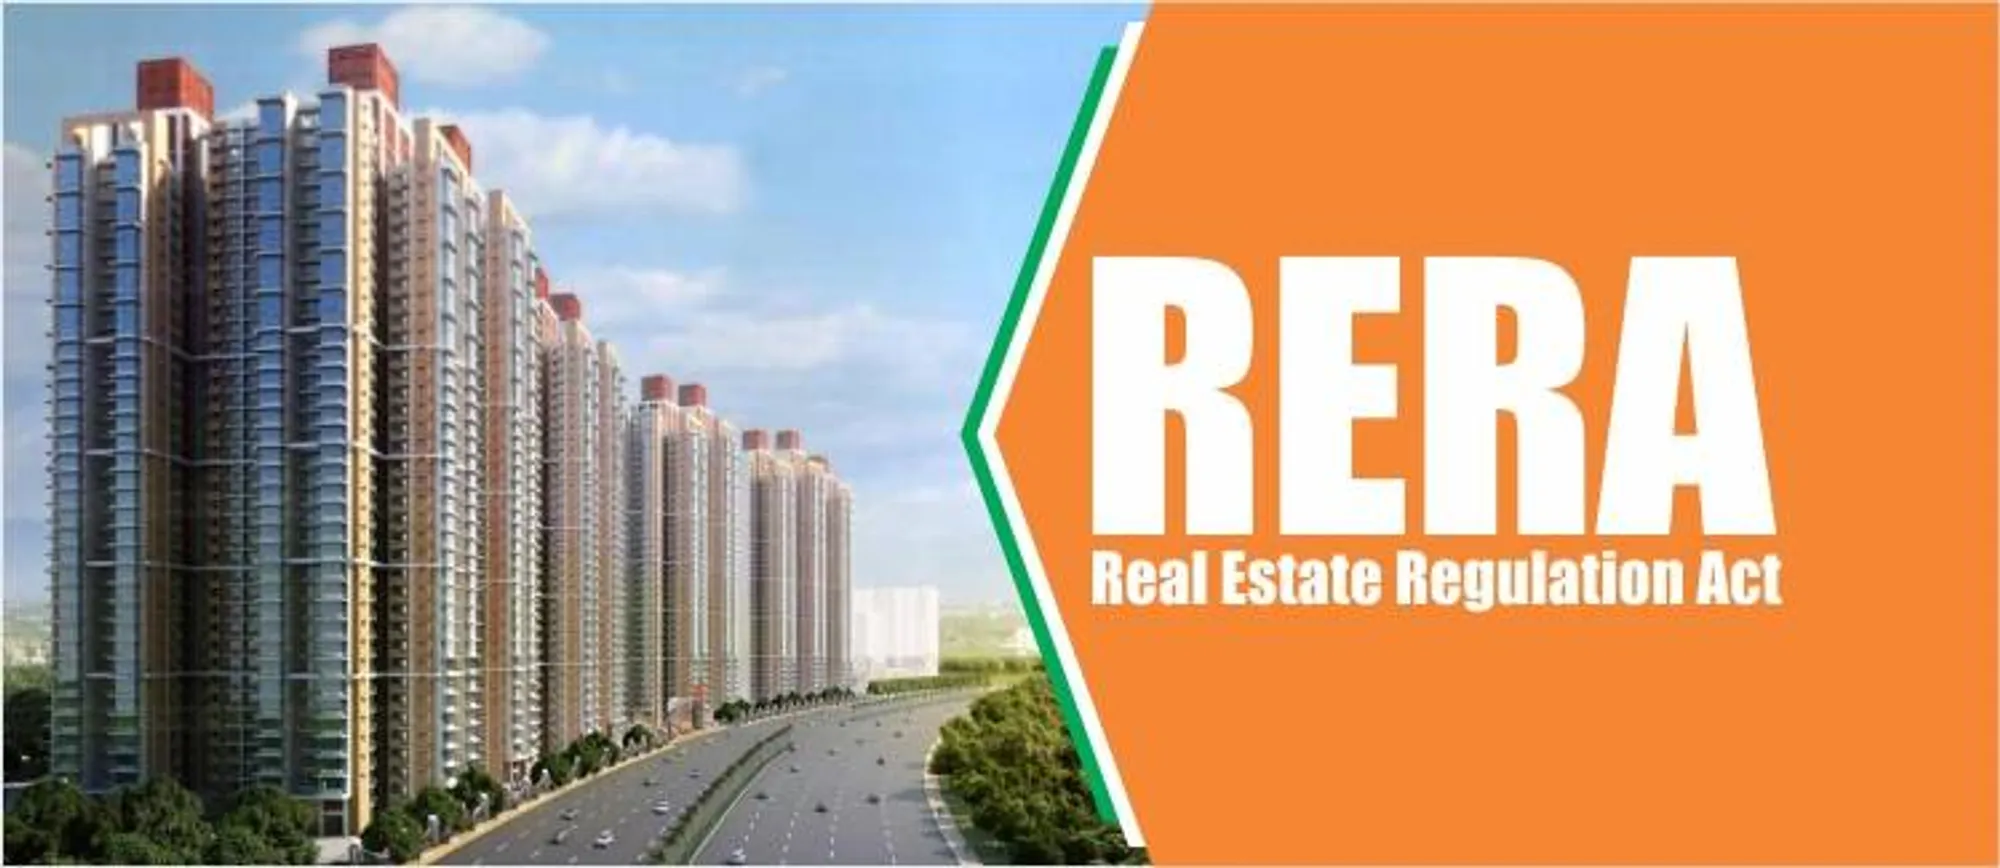 RERA - Real Estate Regulation Act